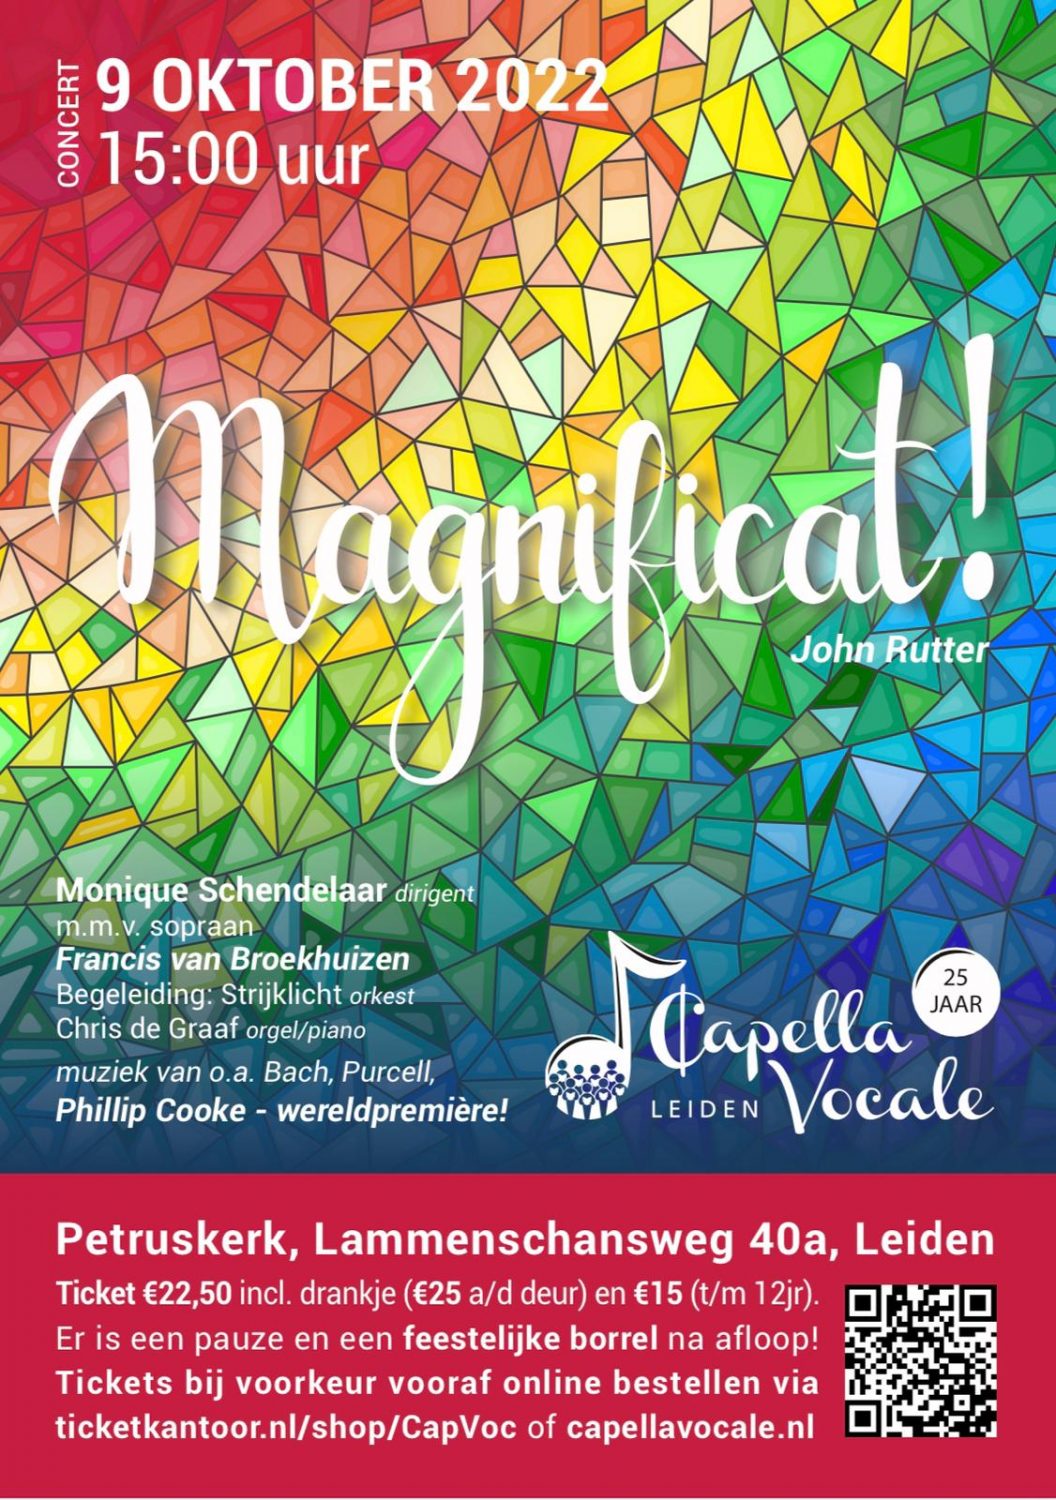 25 jaar Capella Vocale: Magnificat!